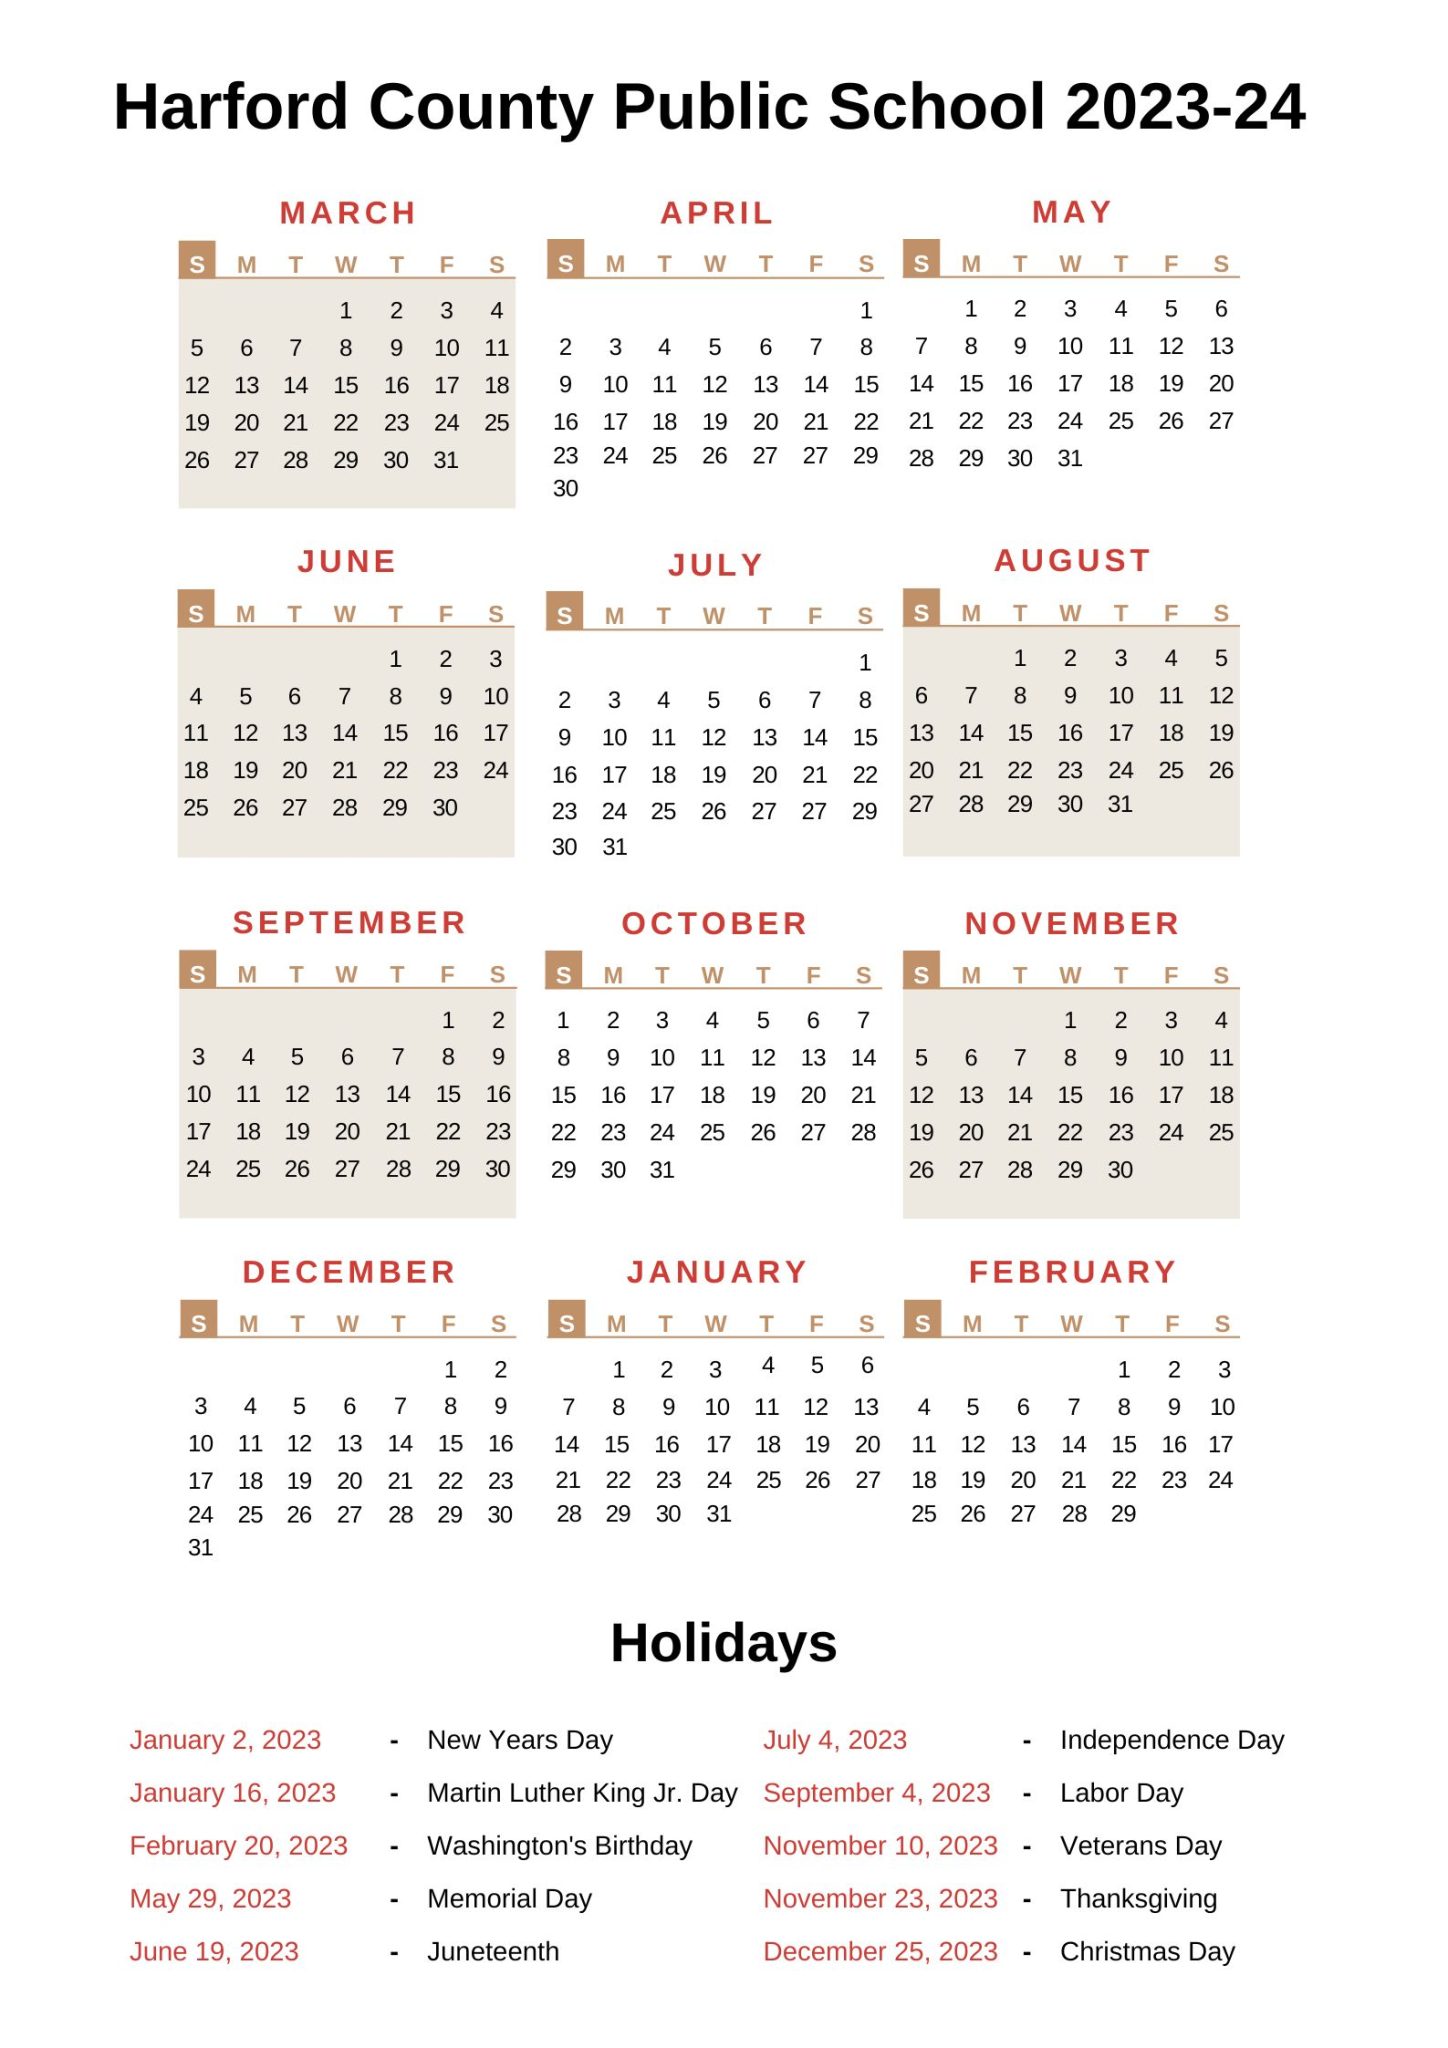 Harford County Public Schools Calendar 2023 24 With Holidays